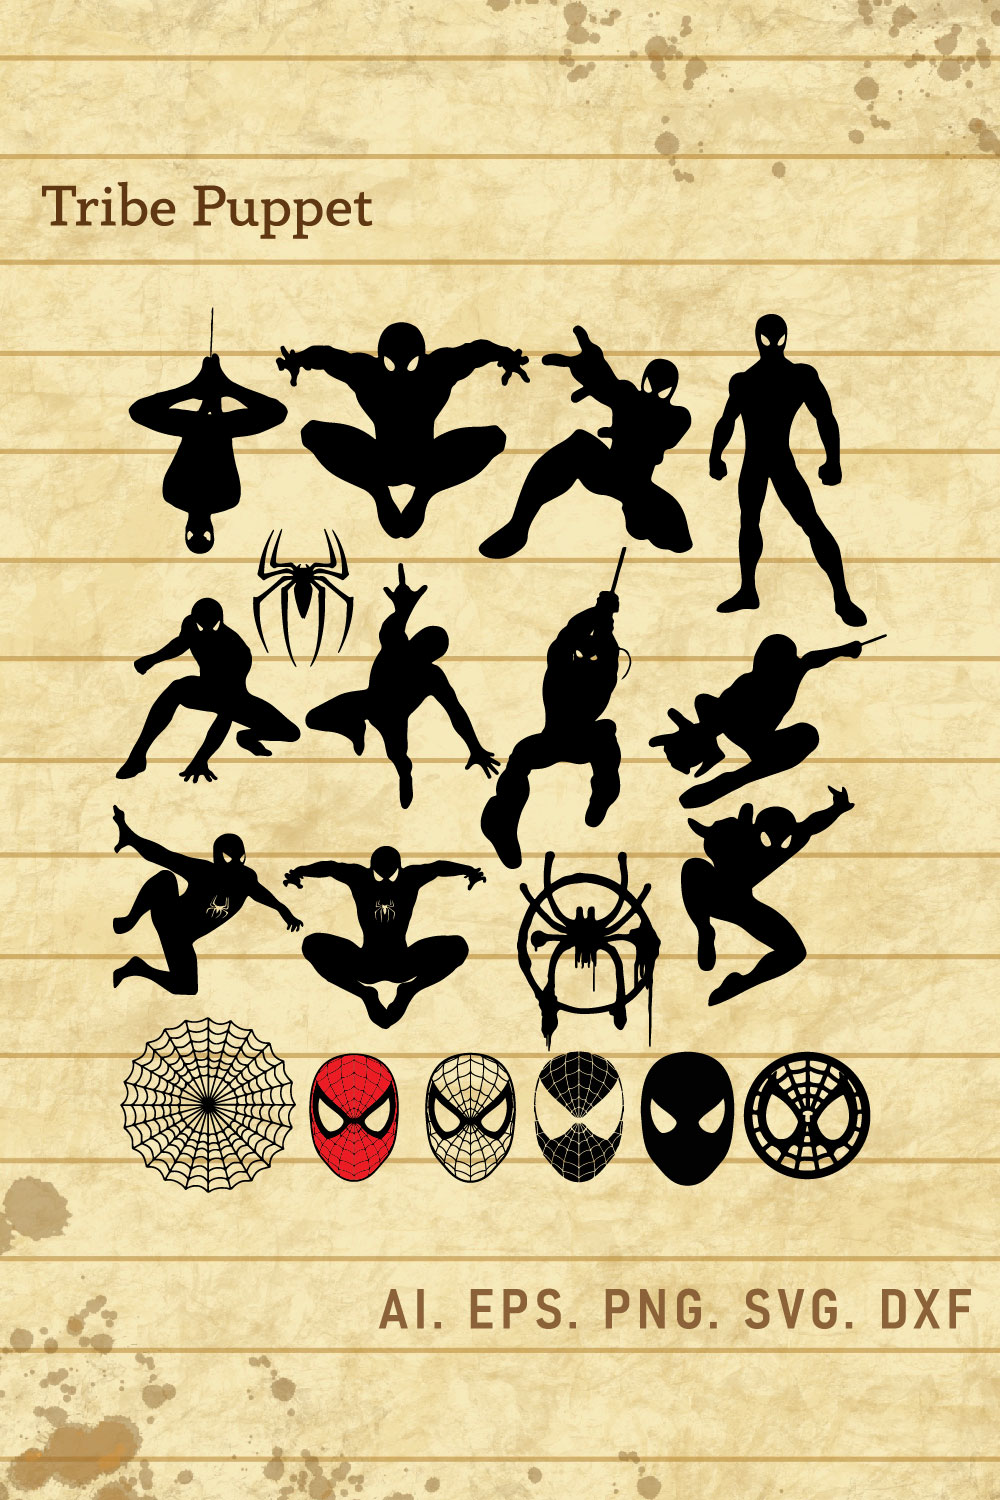 Spider Man SVG 2 pinterest preview image.